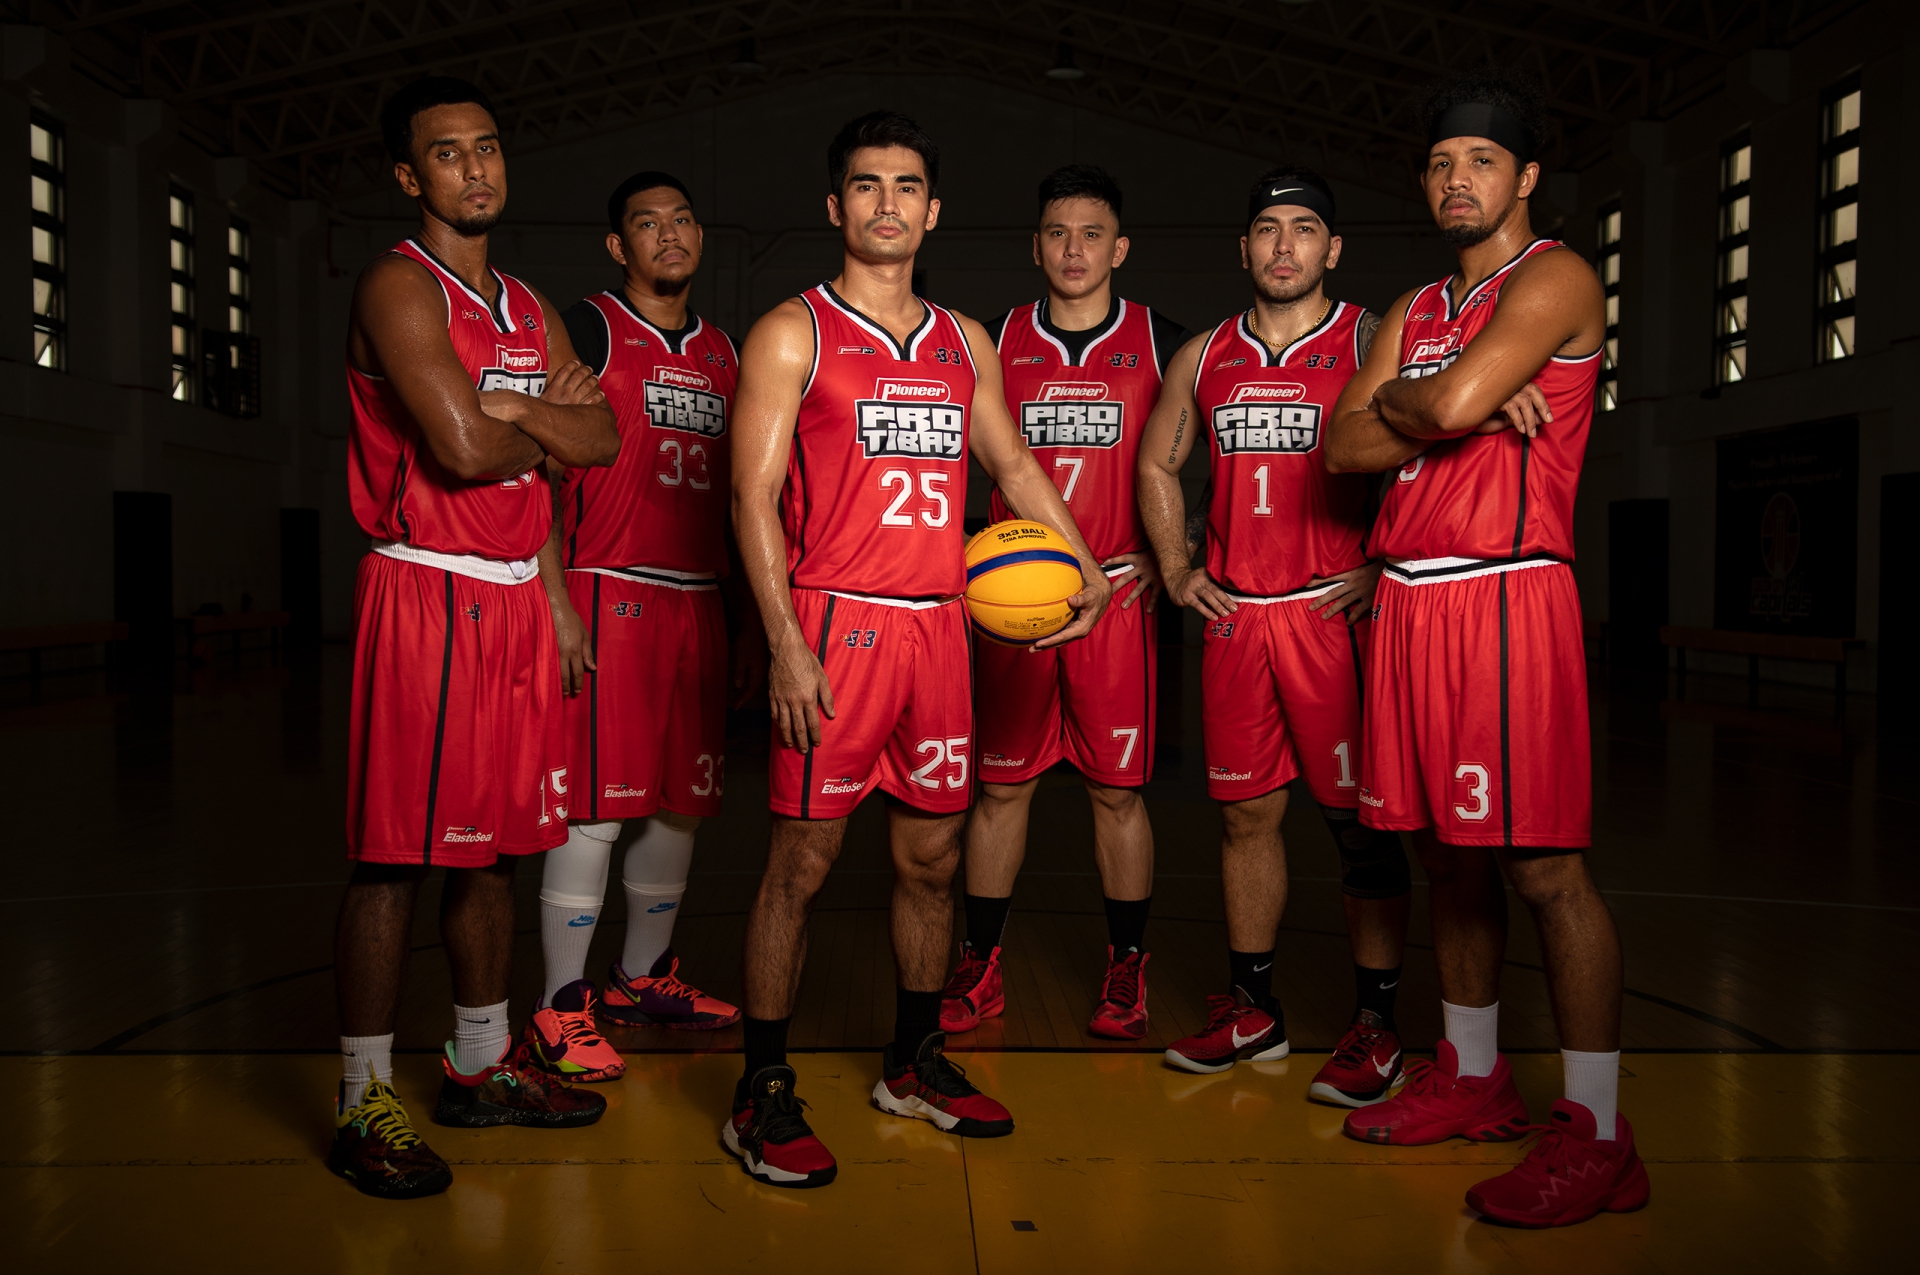 The Pioneer Pro Tibay basketball team